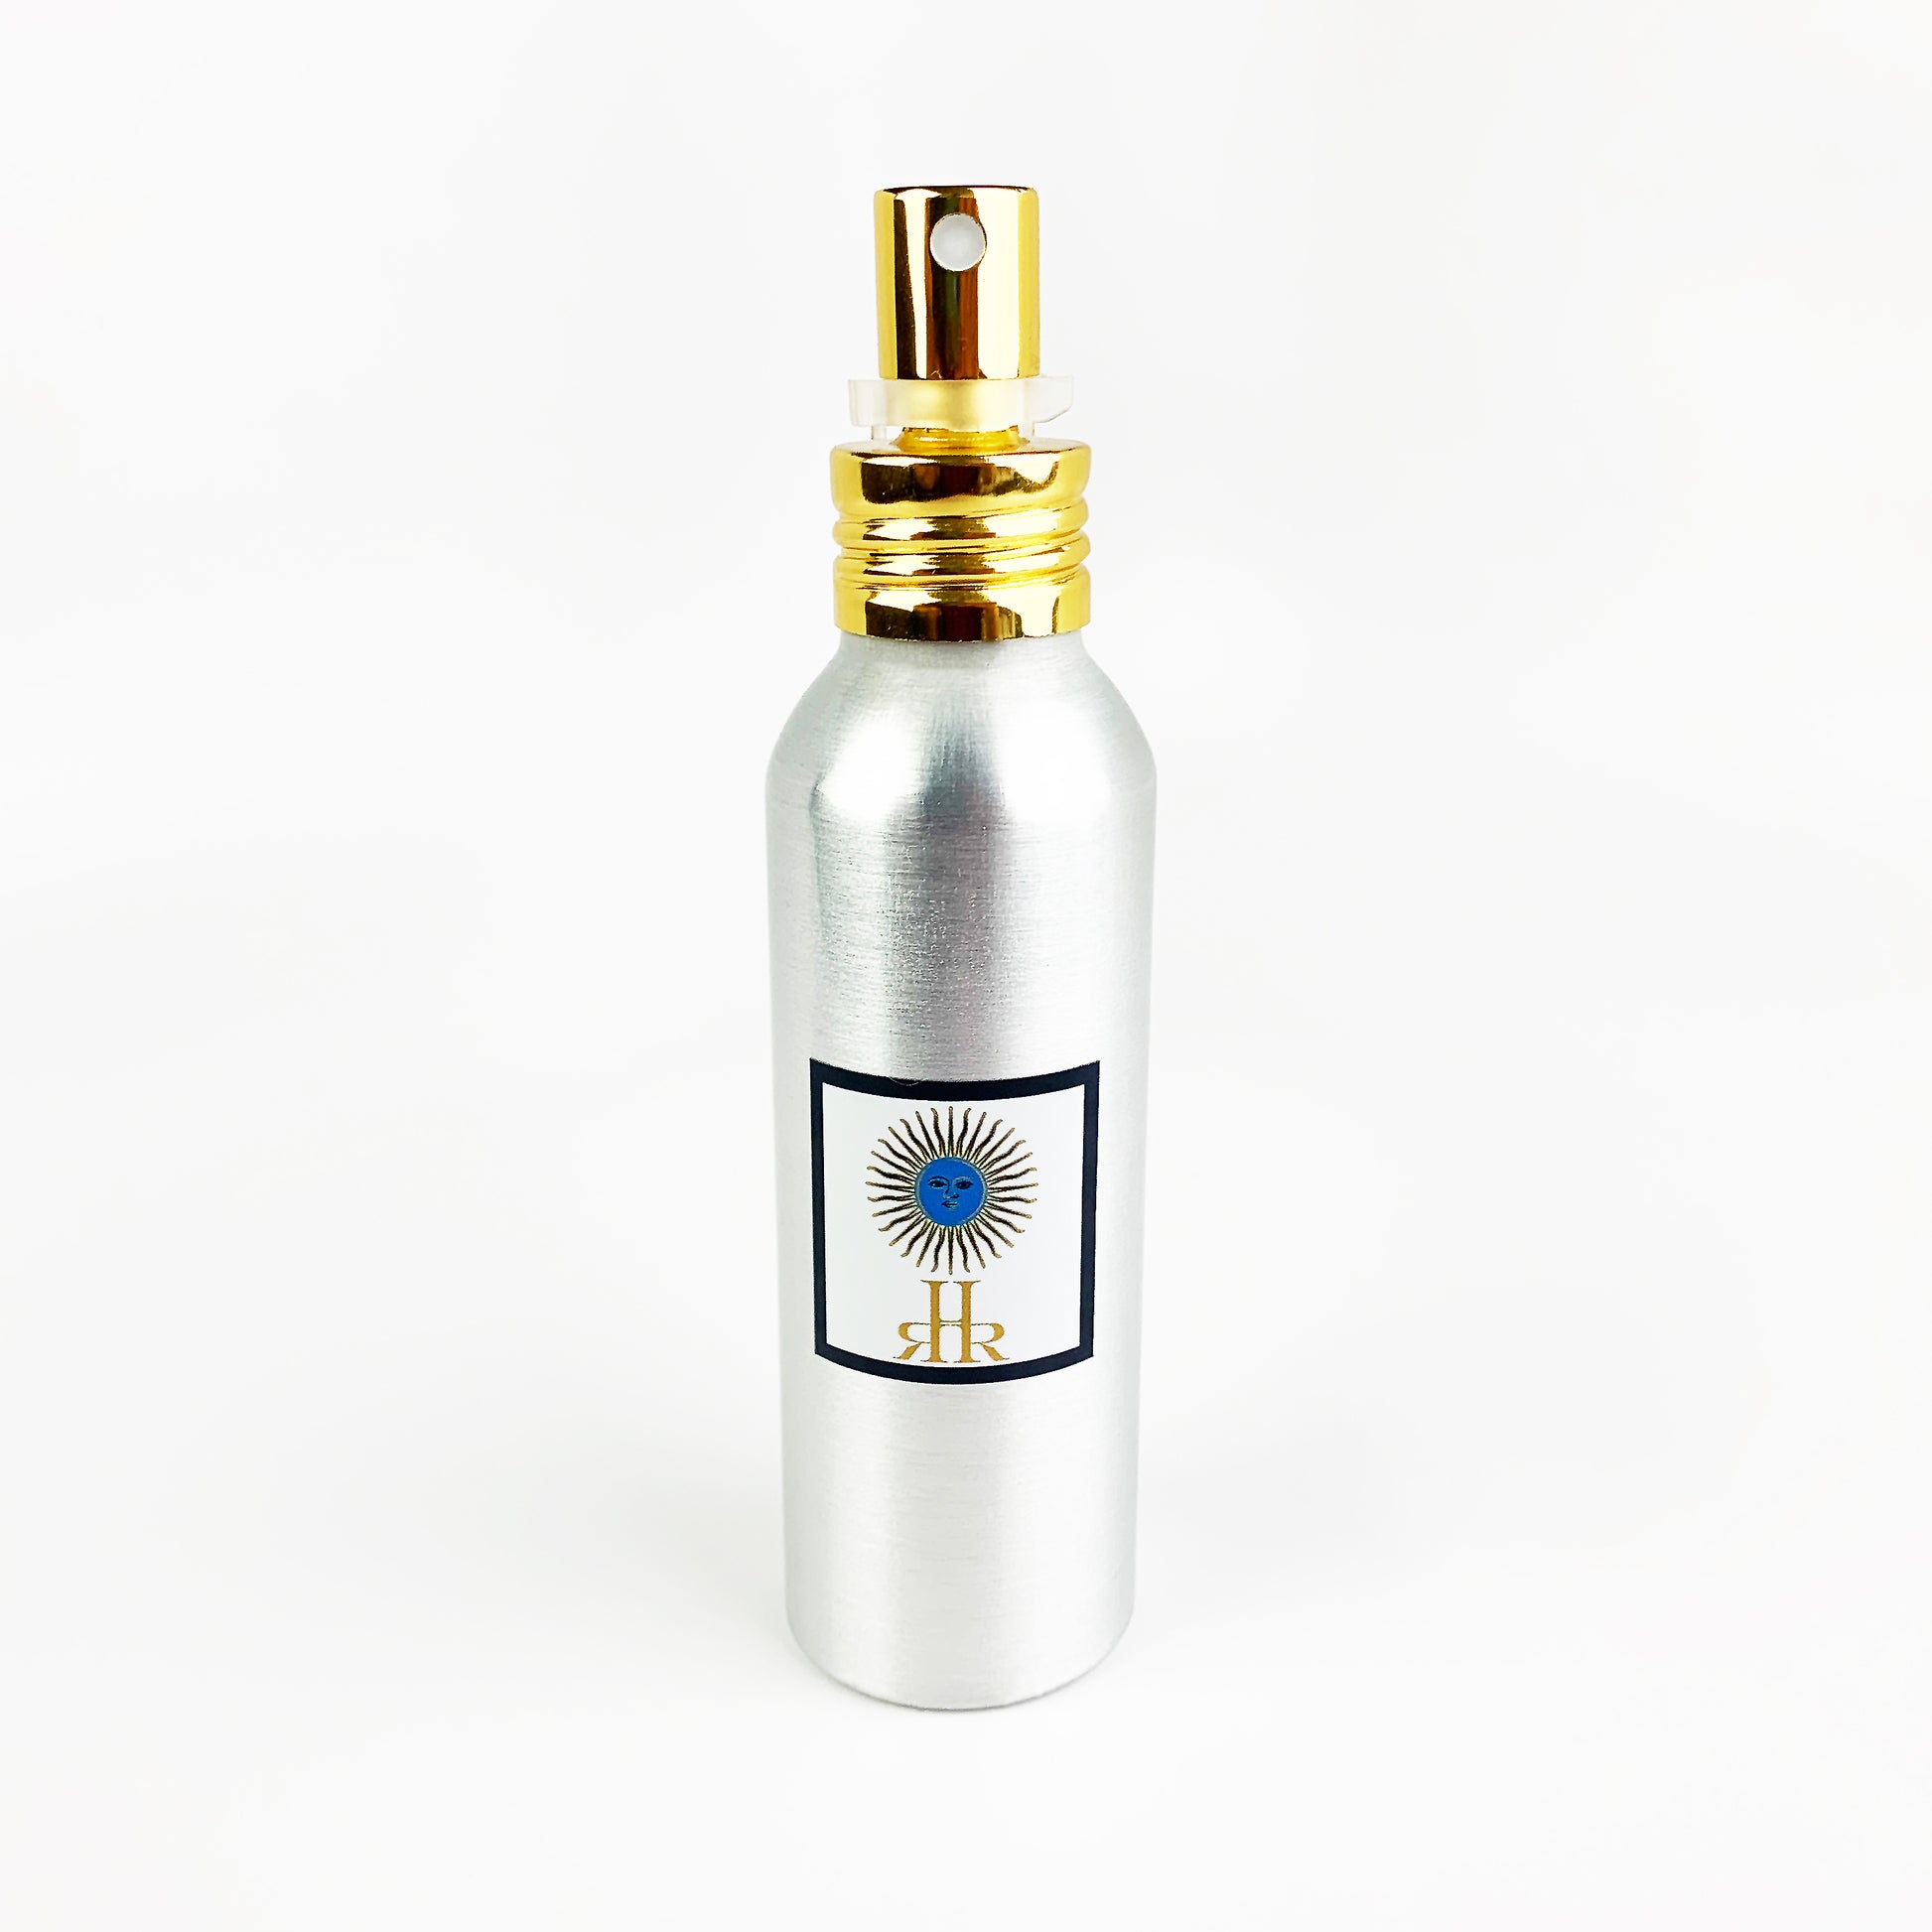 Atlántico Travel Room Spray - RHR Luxury Home Fragrance